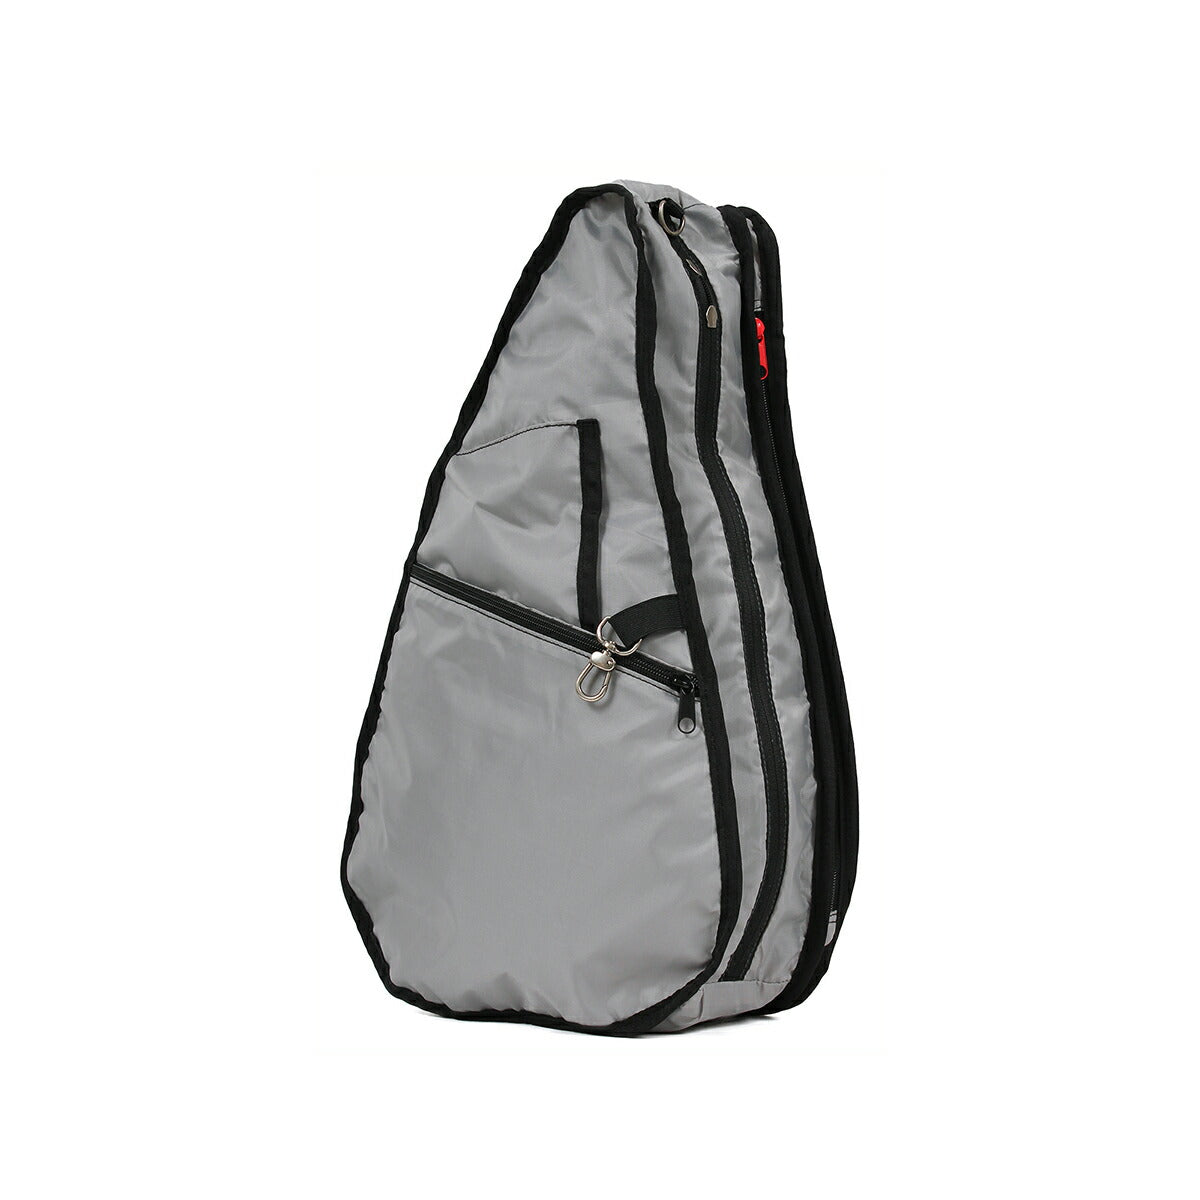 AmeriBag Healthy Back Bag tote Distressed Nylon Medium (Brown)